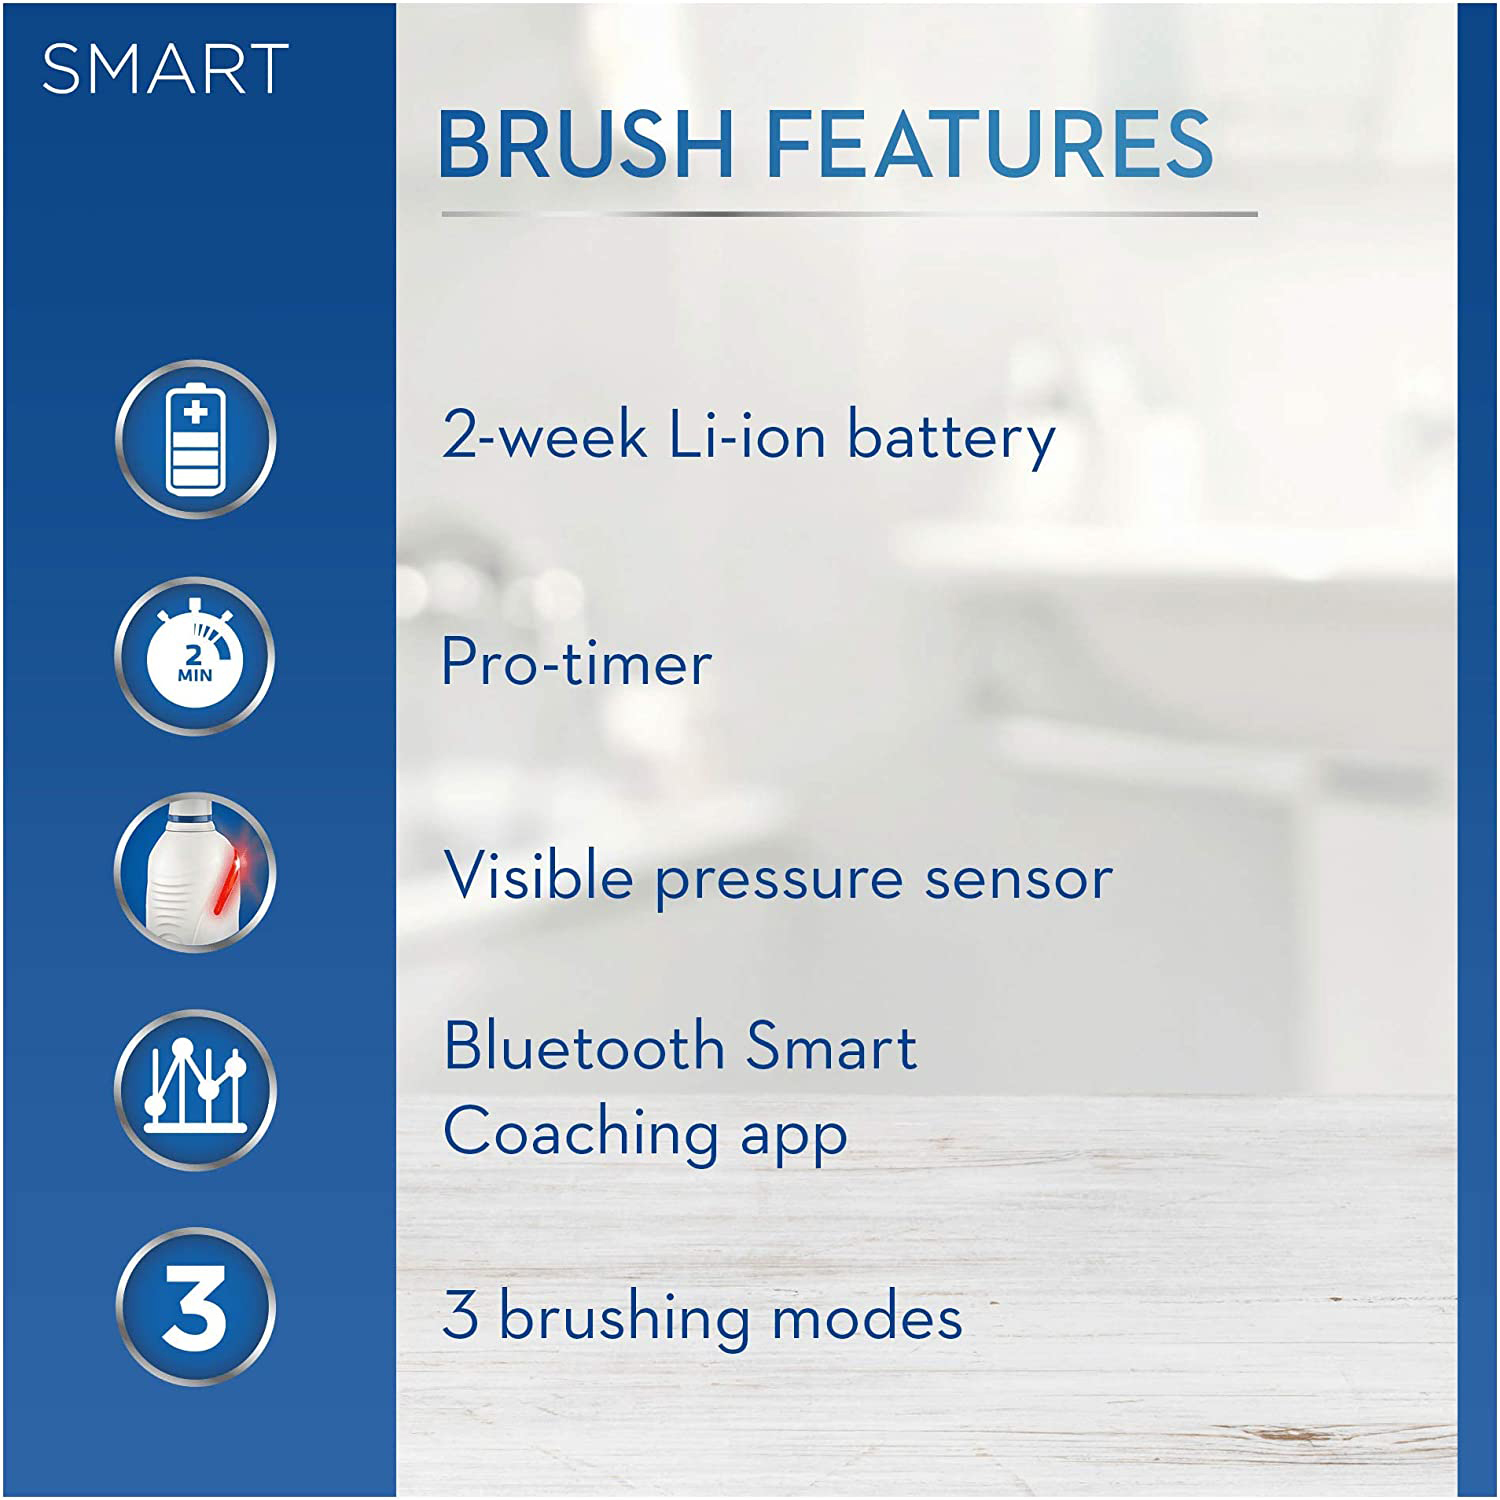 3 Brushing modes